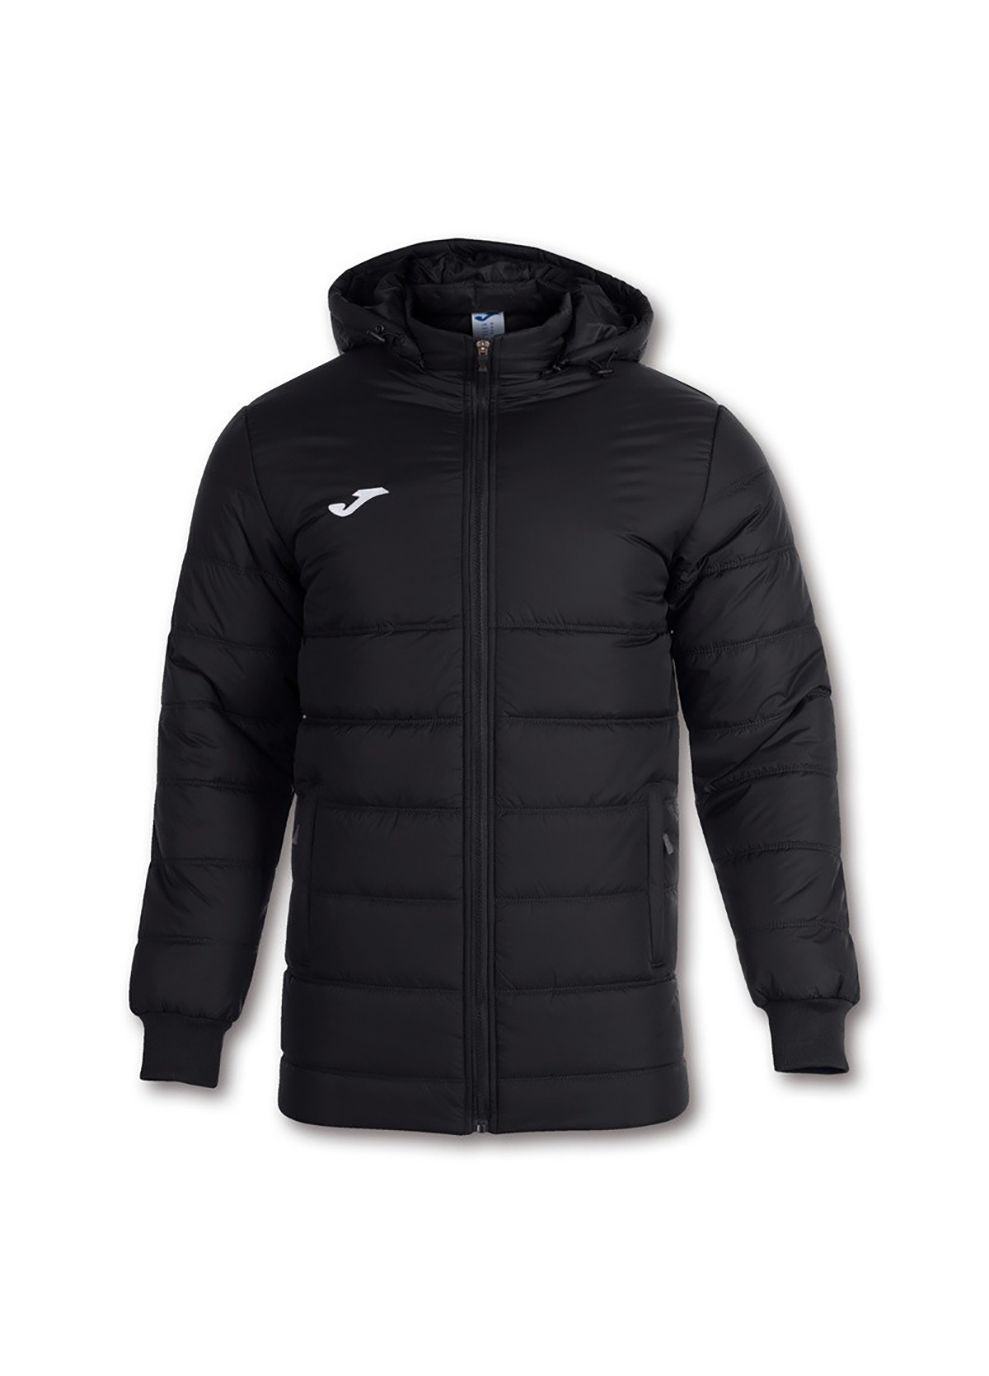 Черная зимняя куртка мужская urban iv anorak черный Joma